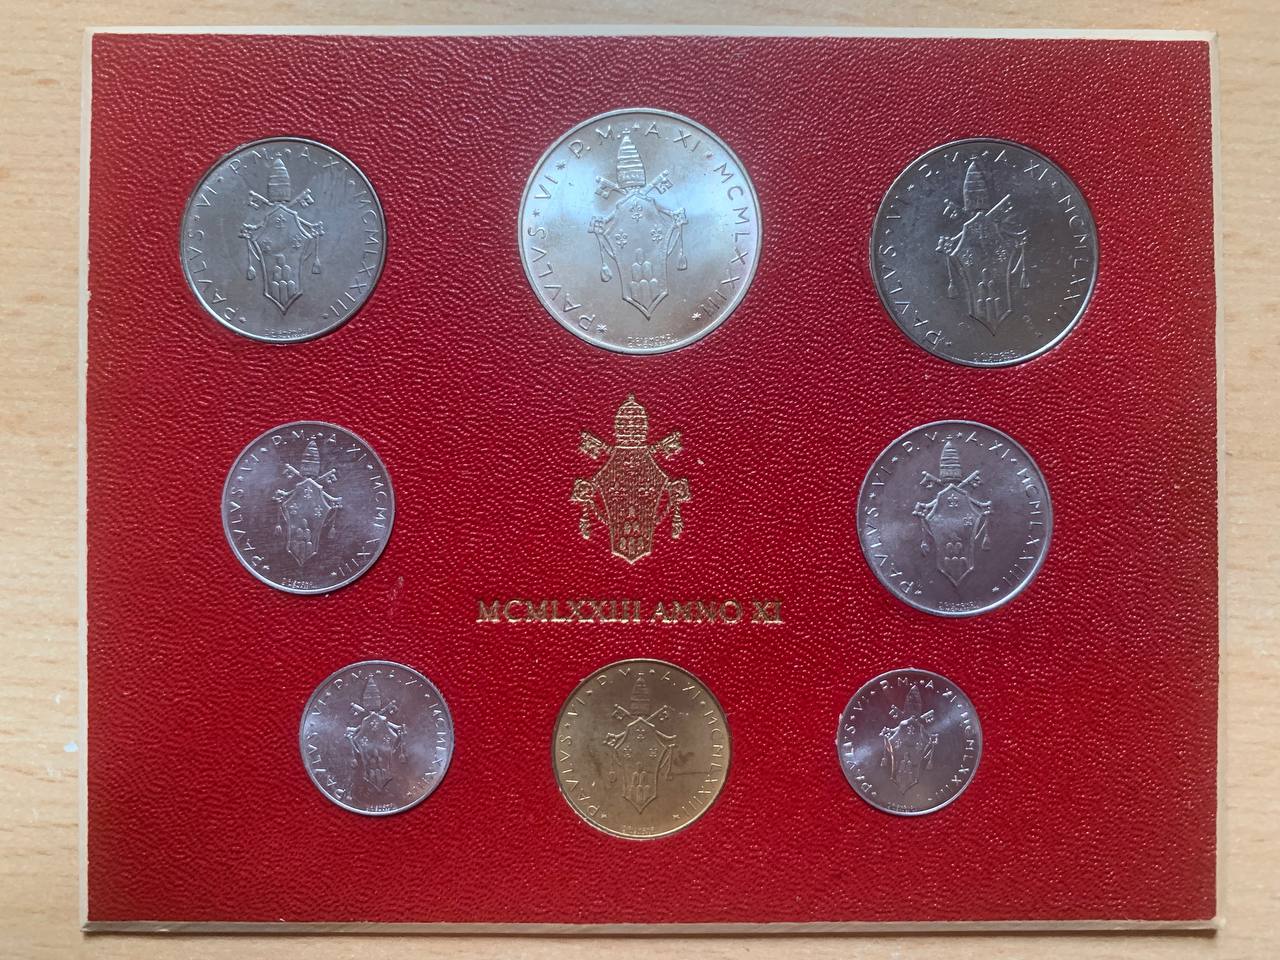  Vatikan 1973 Coin set BU (8 coins)   